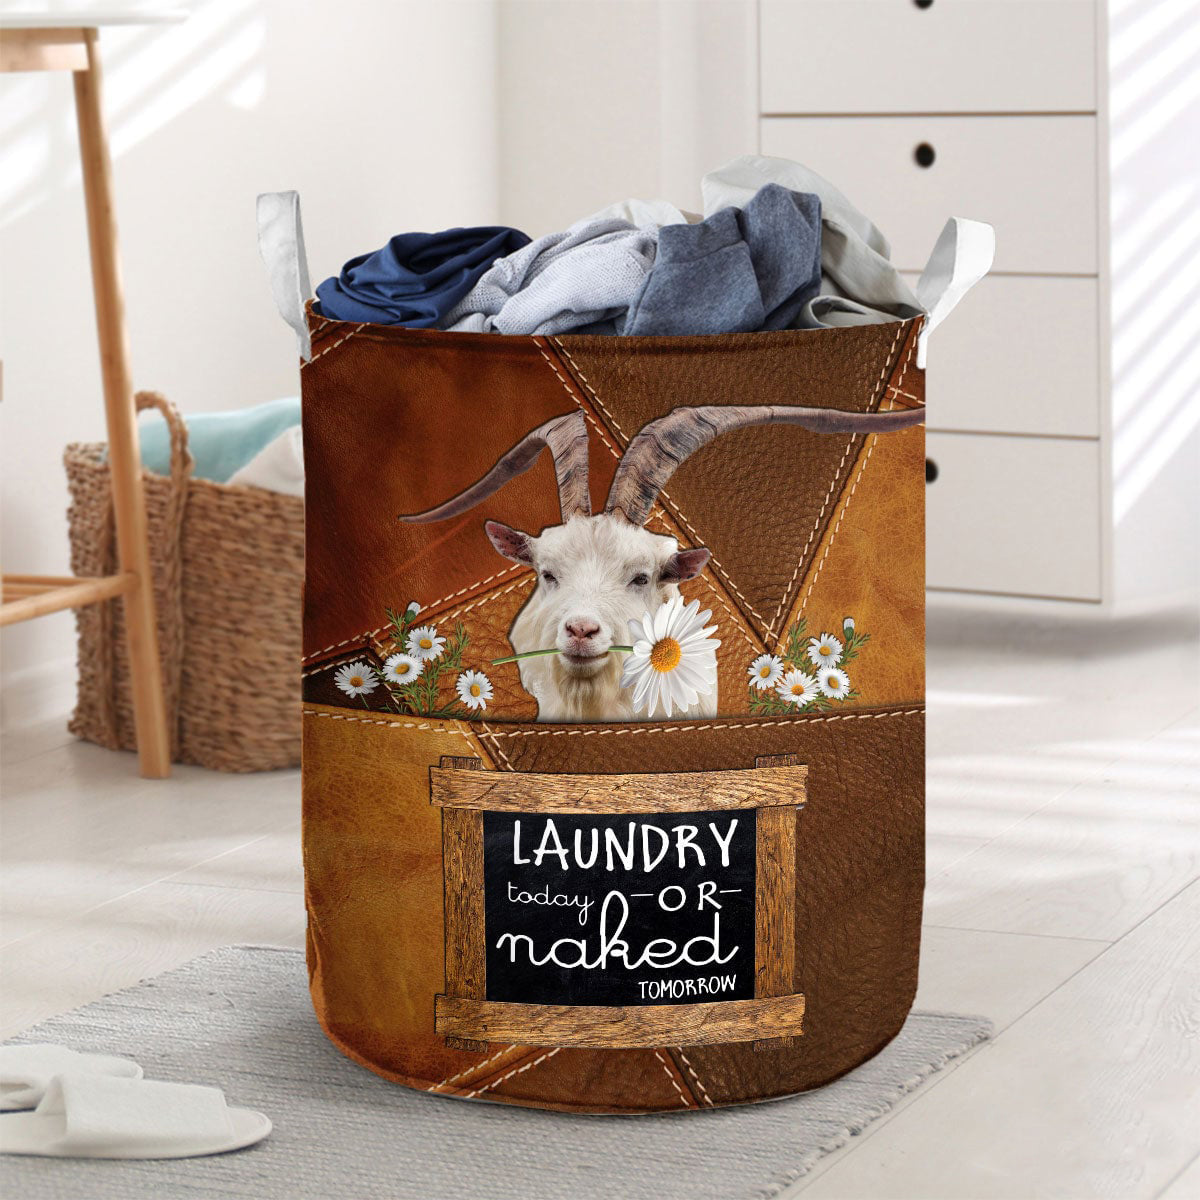 CASHMERE-laundry today or naked tomorrow laundry basket